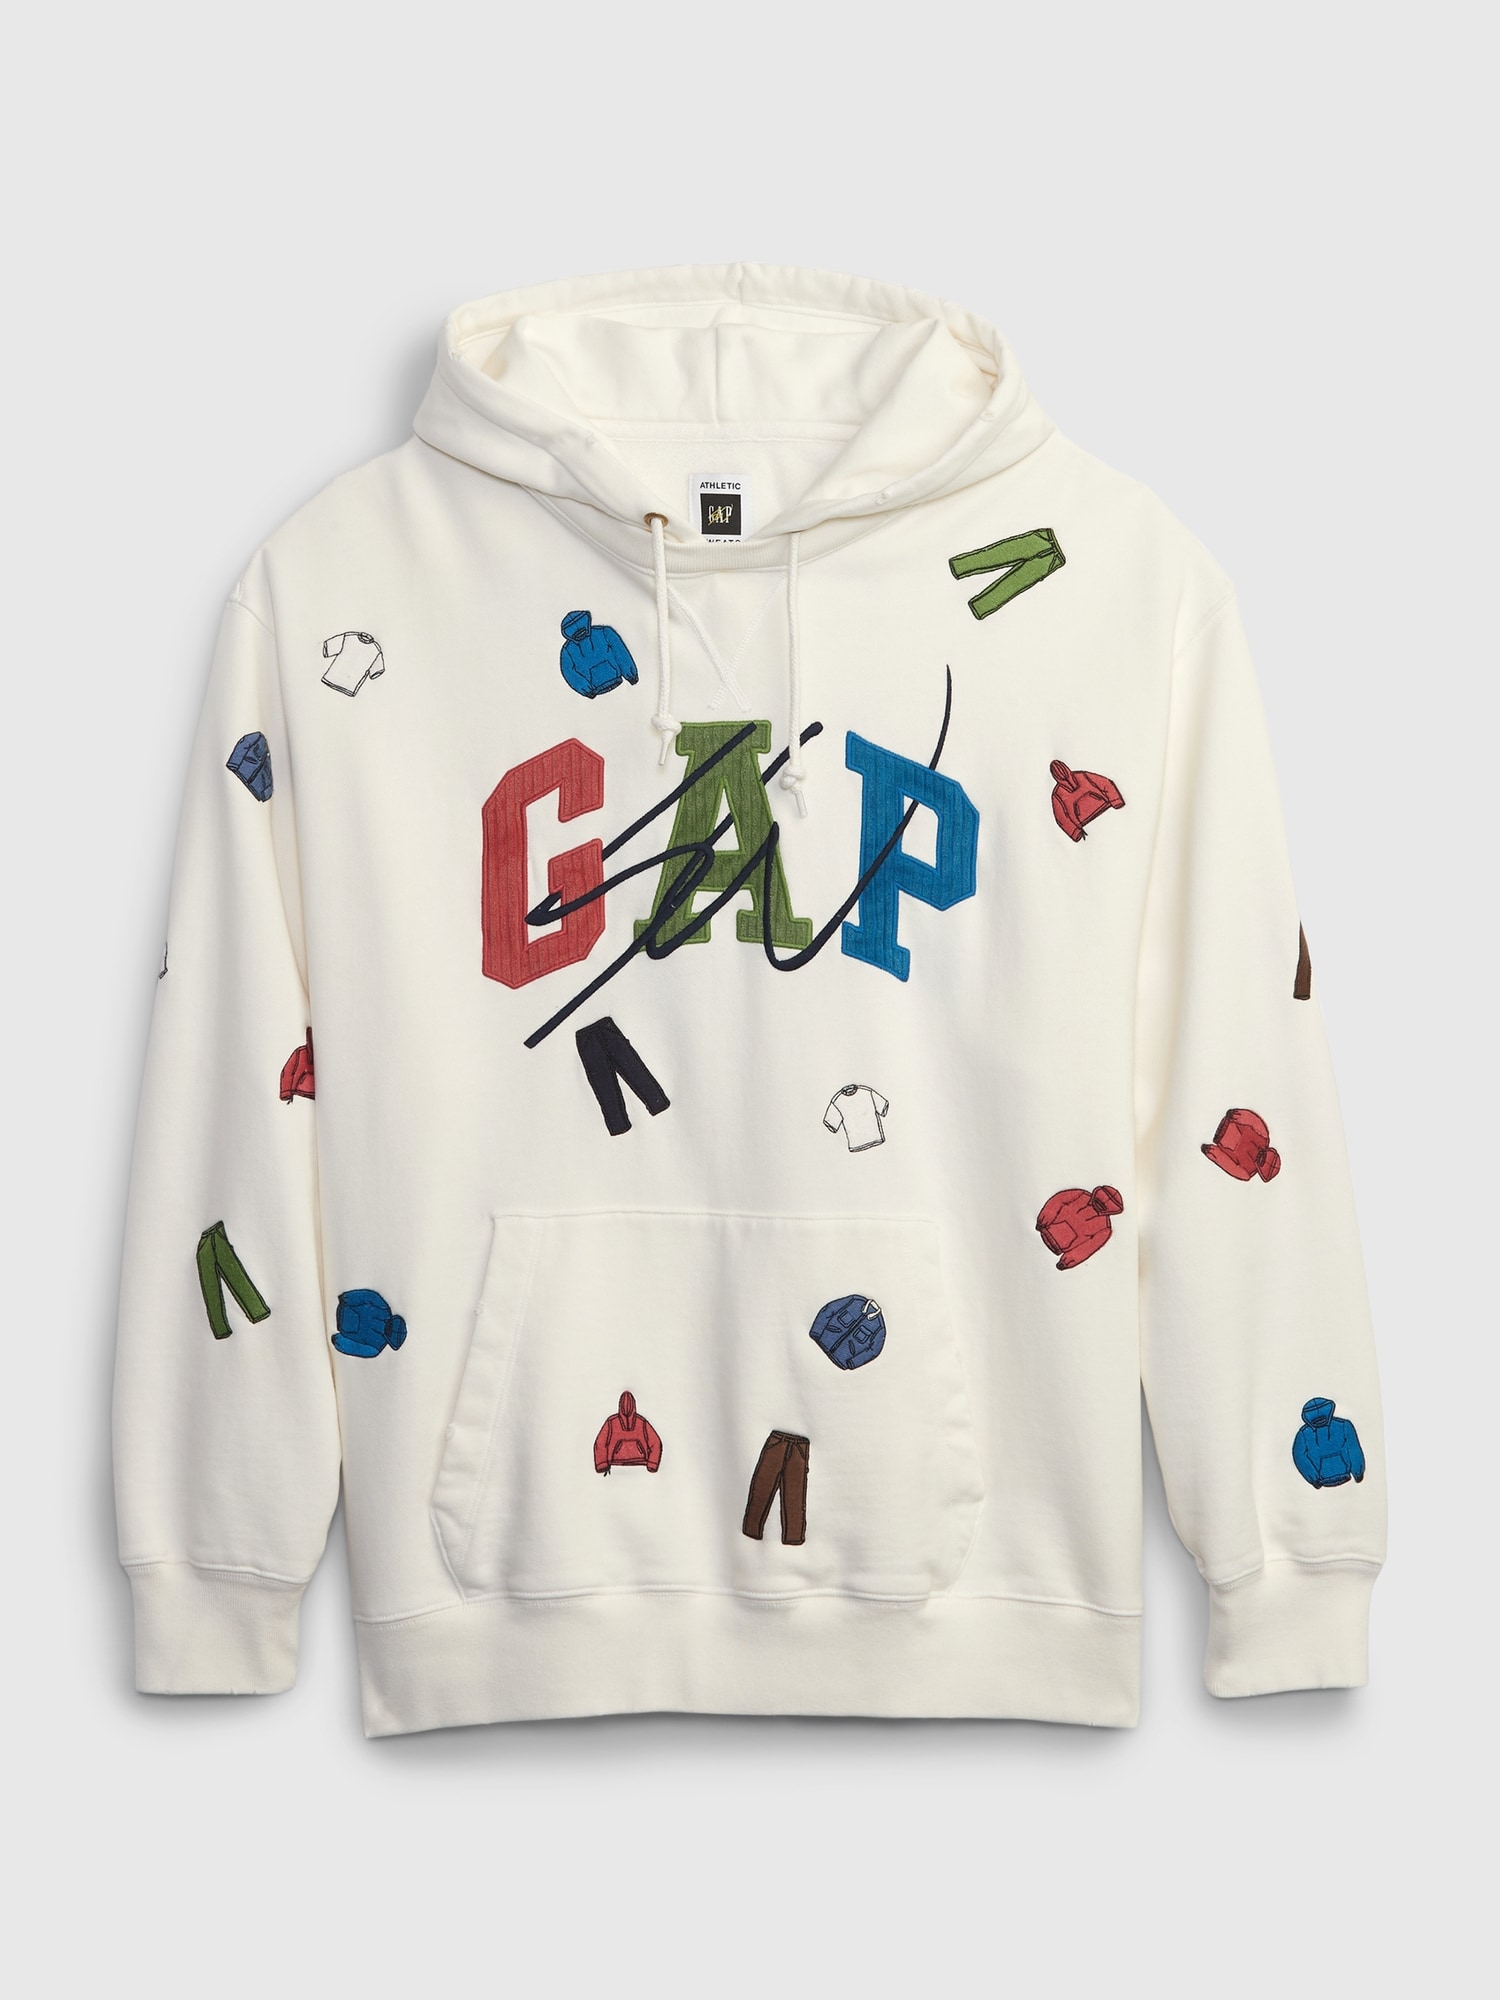 00s〜 gap mountain parka hoodie